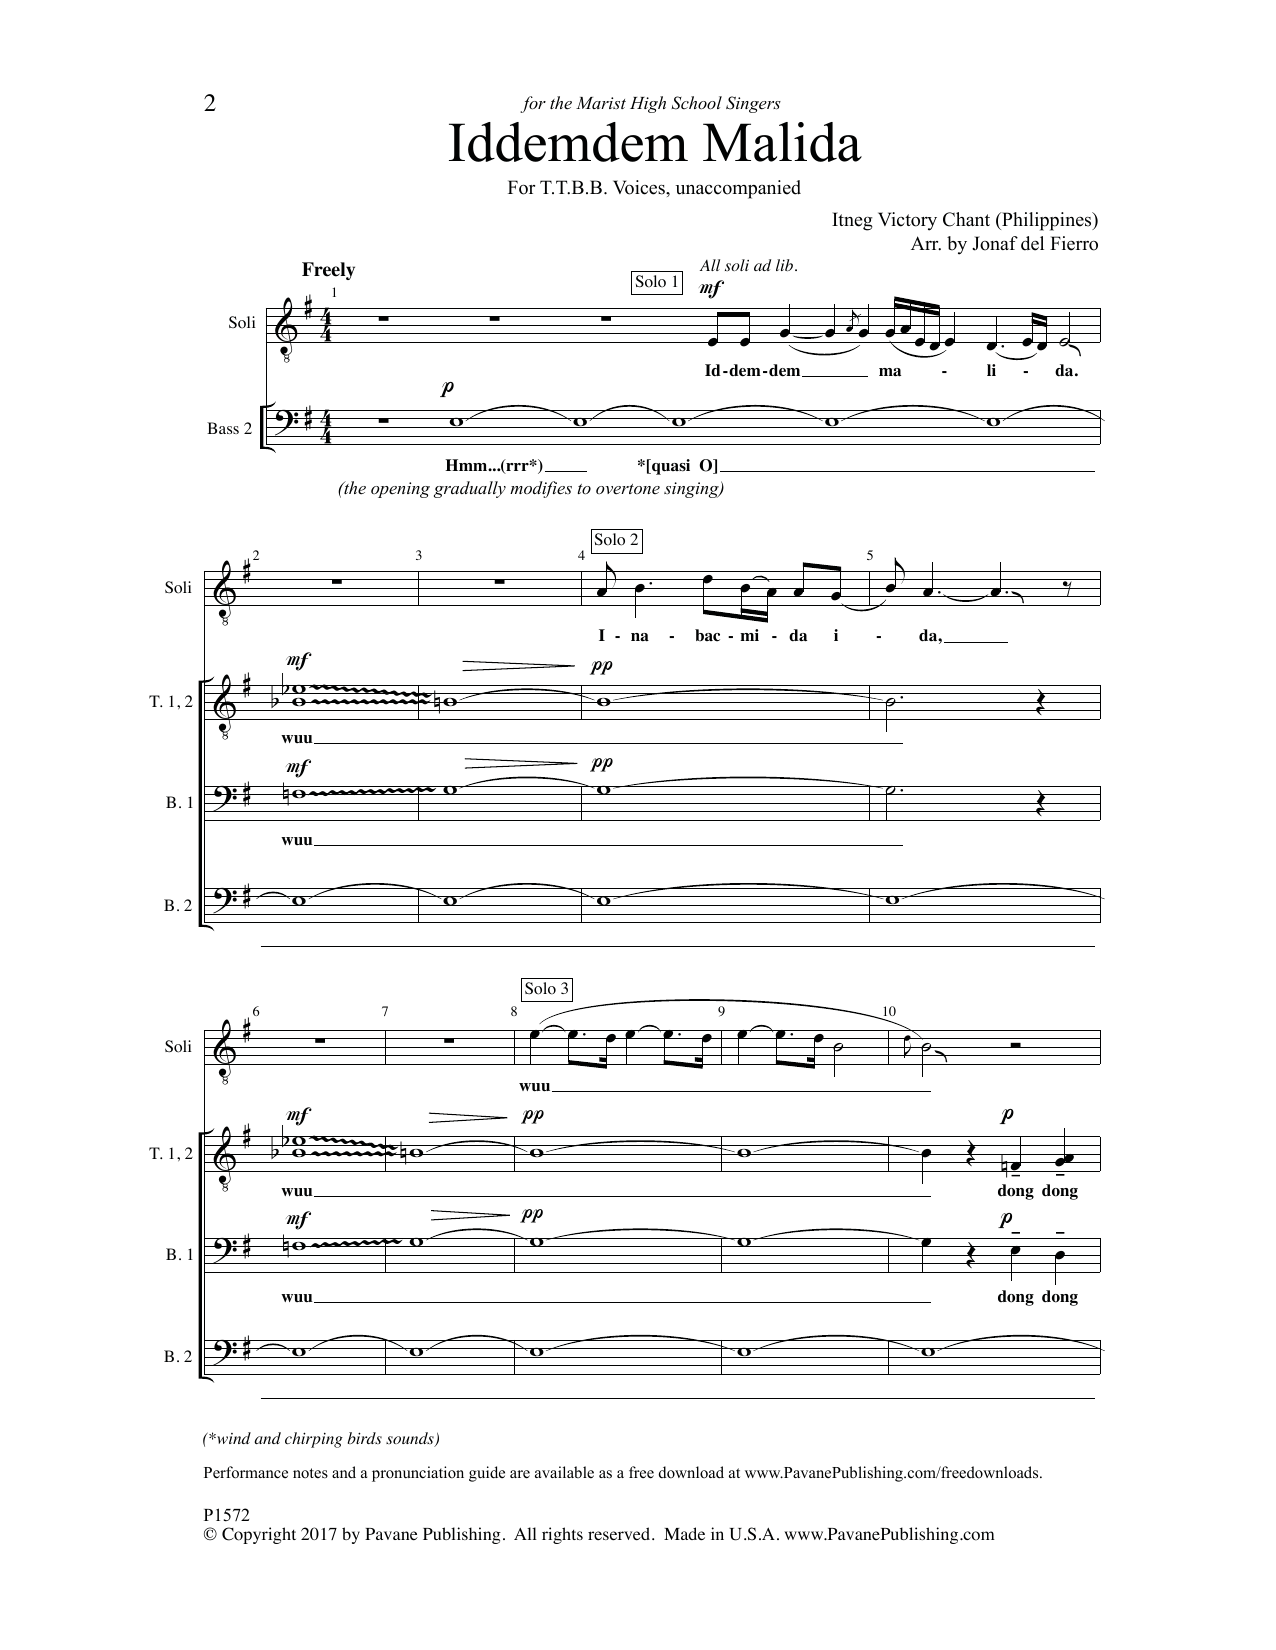 Jonaf del Fierro Iddemdem Malida Sheet Music Notes & Chords for SATB Choir - Download or Print PDF